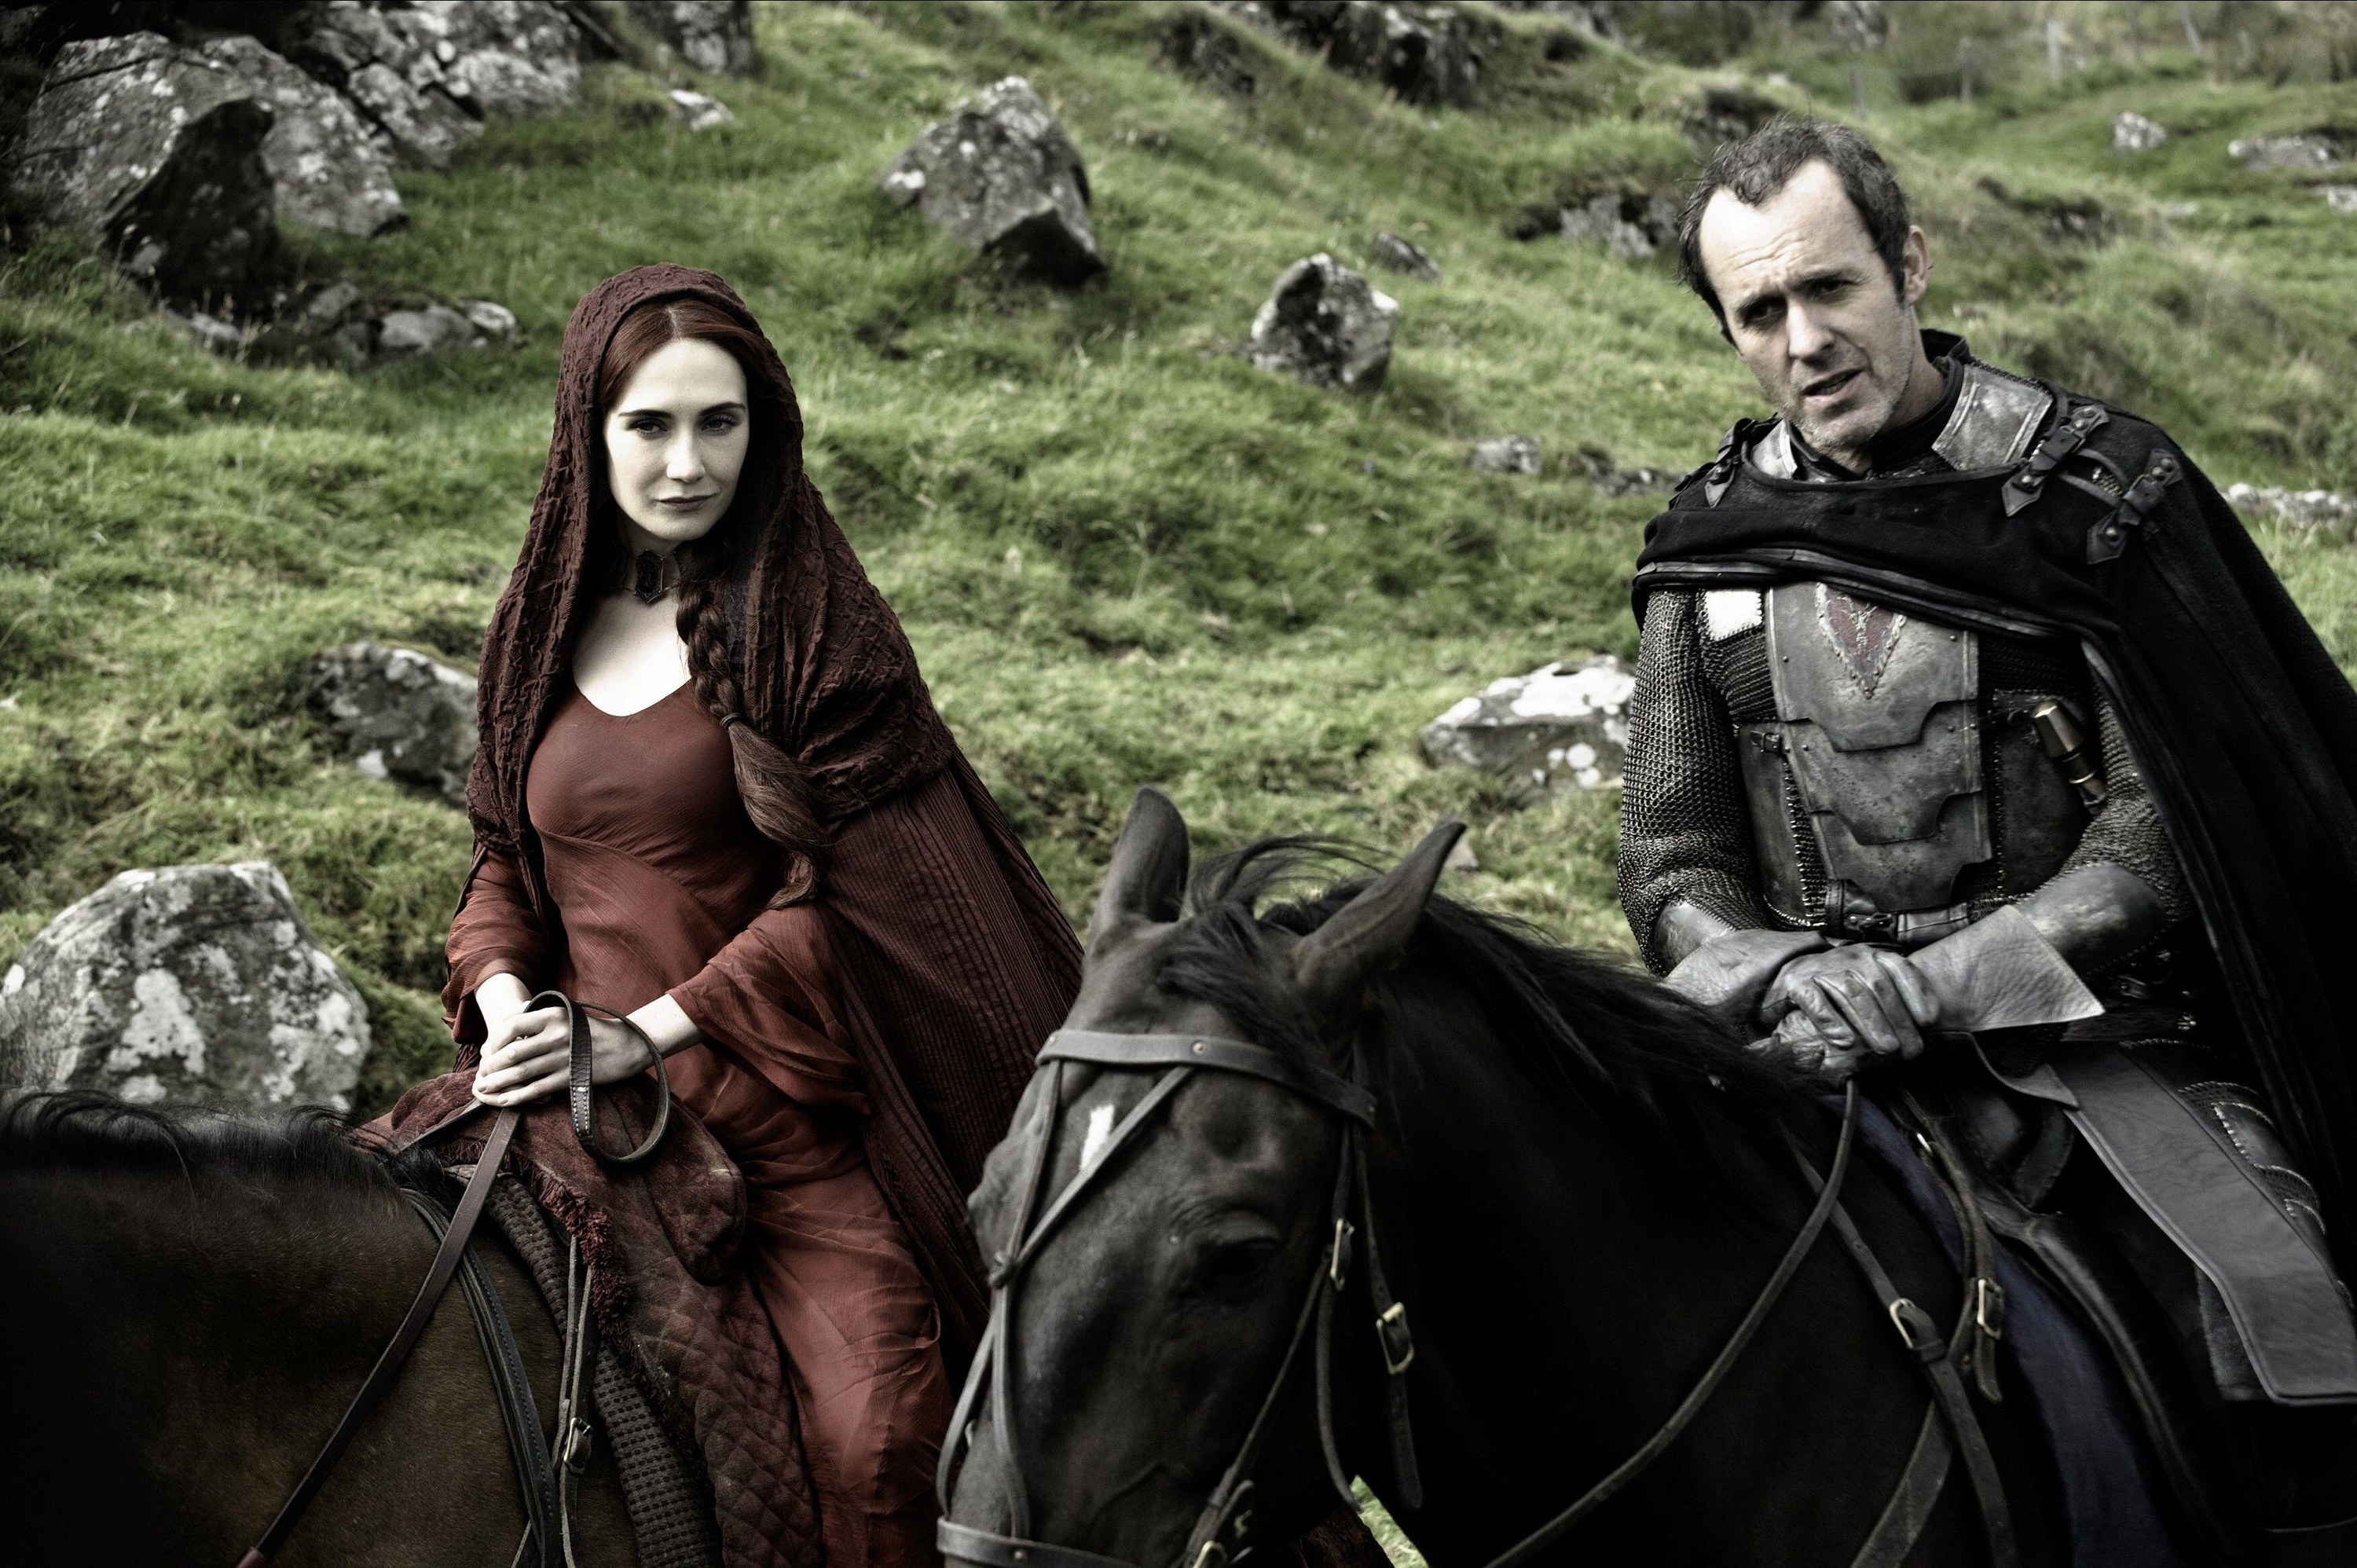 Stephen Dillane as Stannis Baratheon in “Game of Thrones”